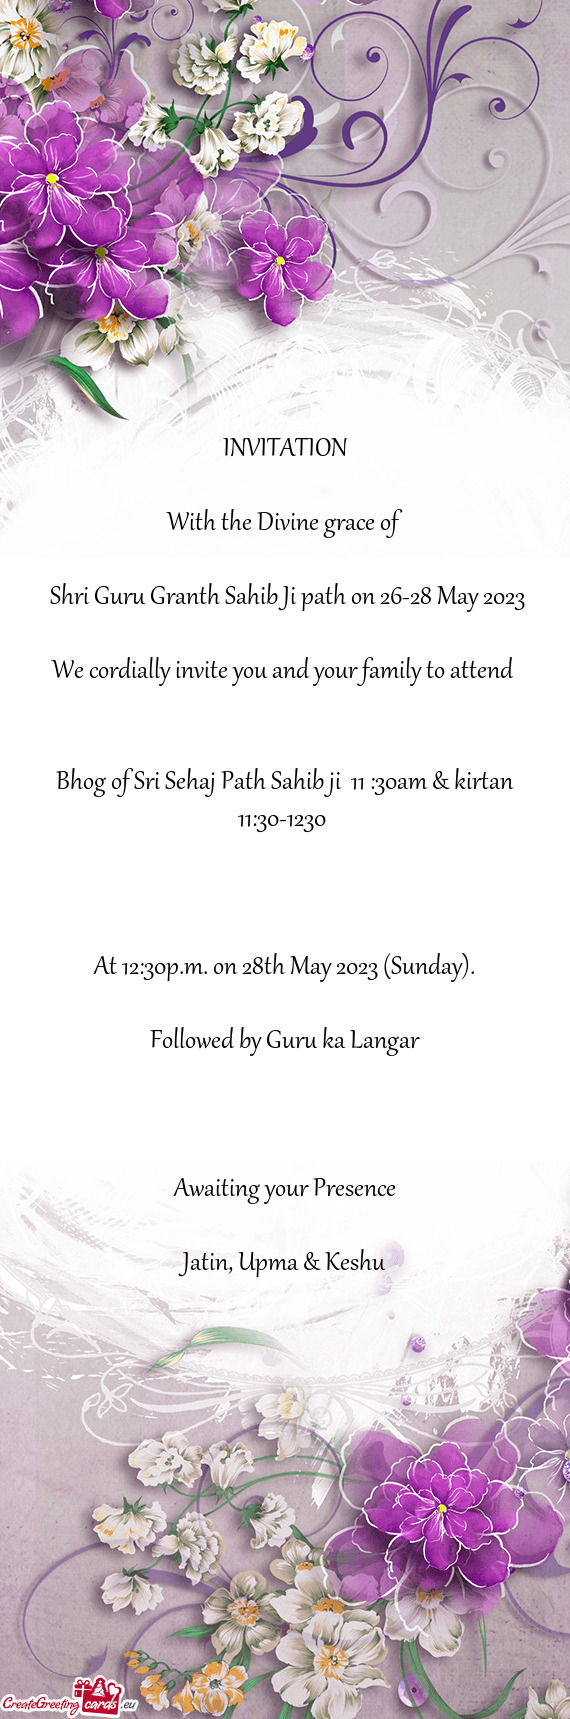 Shri Guru Granth Sahib Ji path on 26-28 May 2023